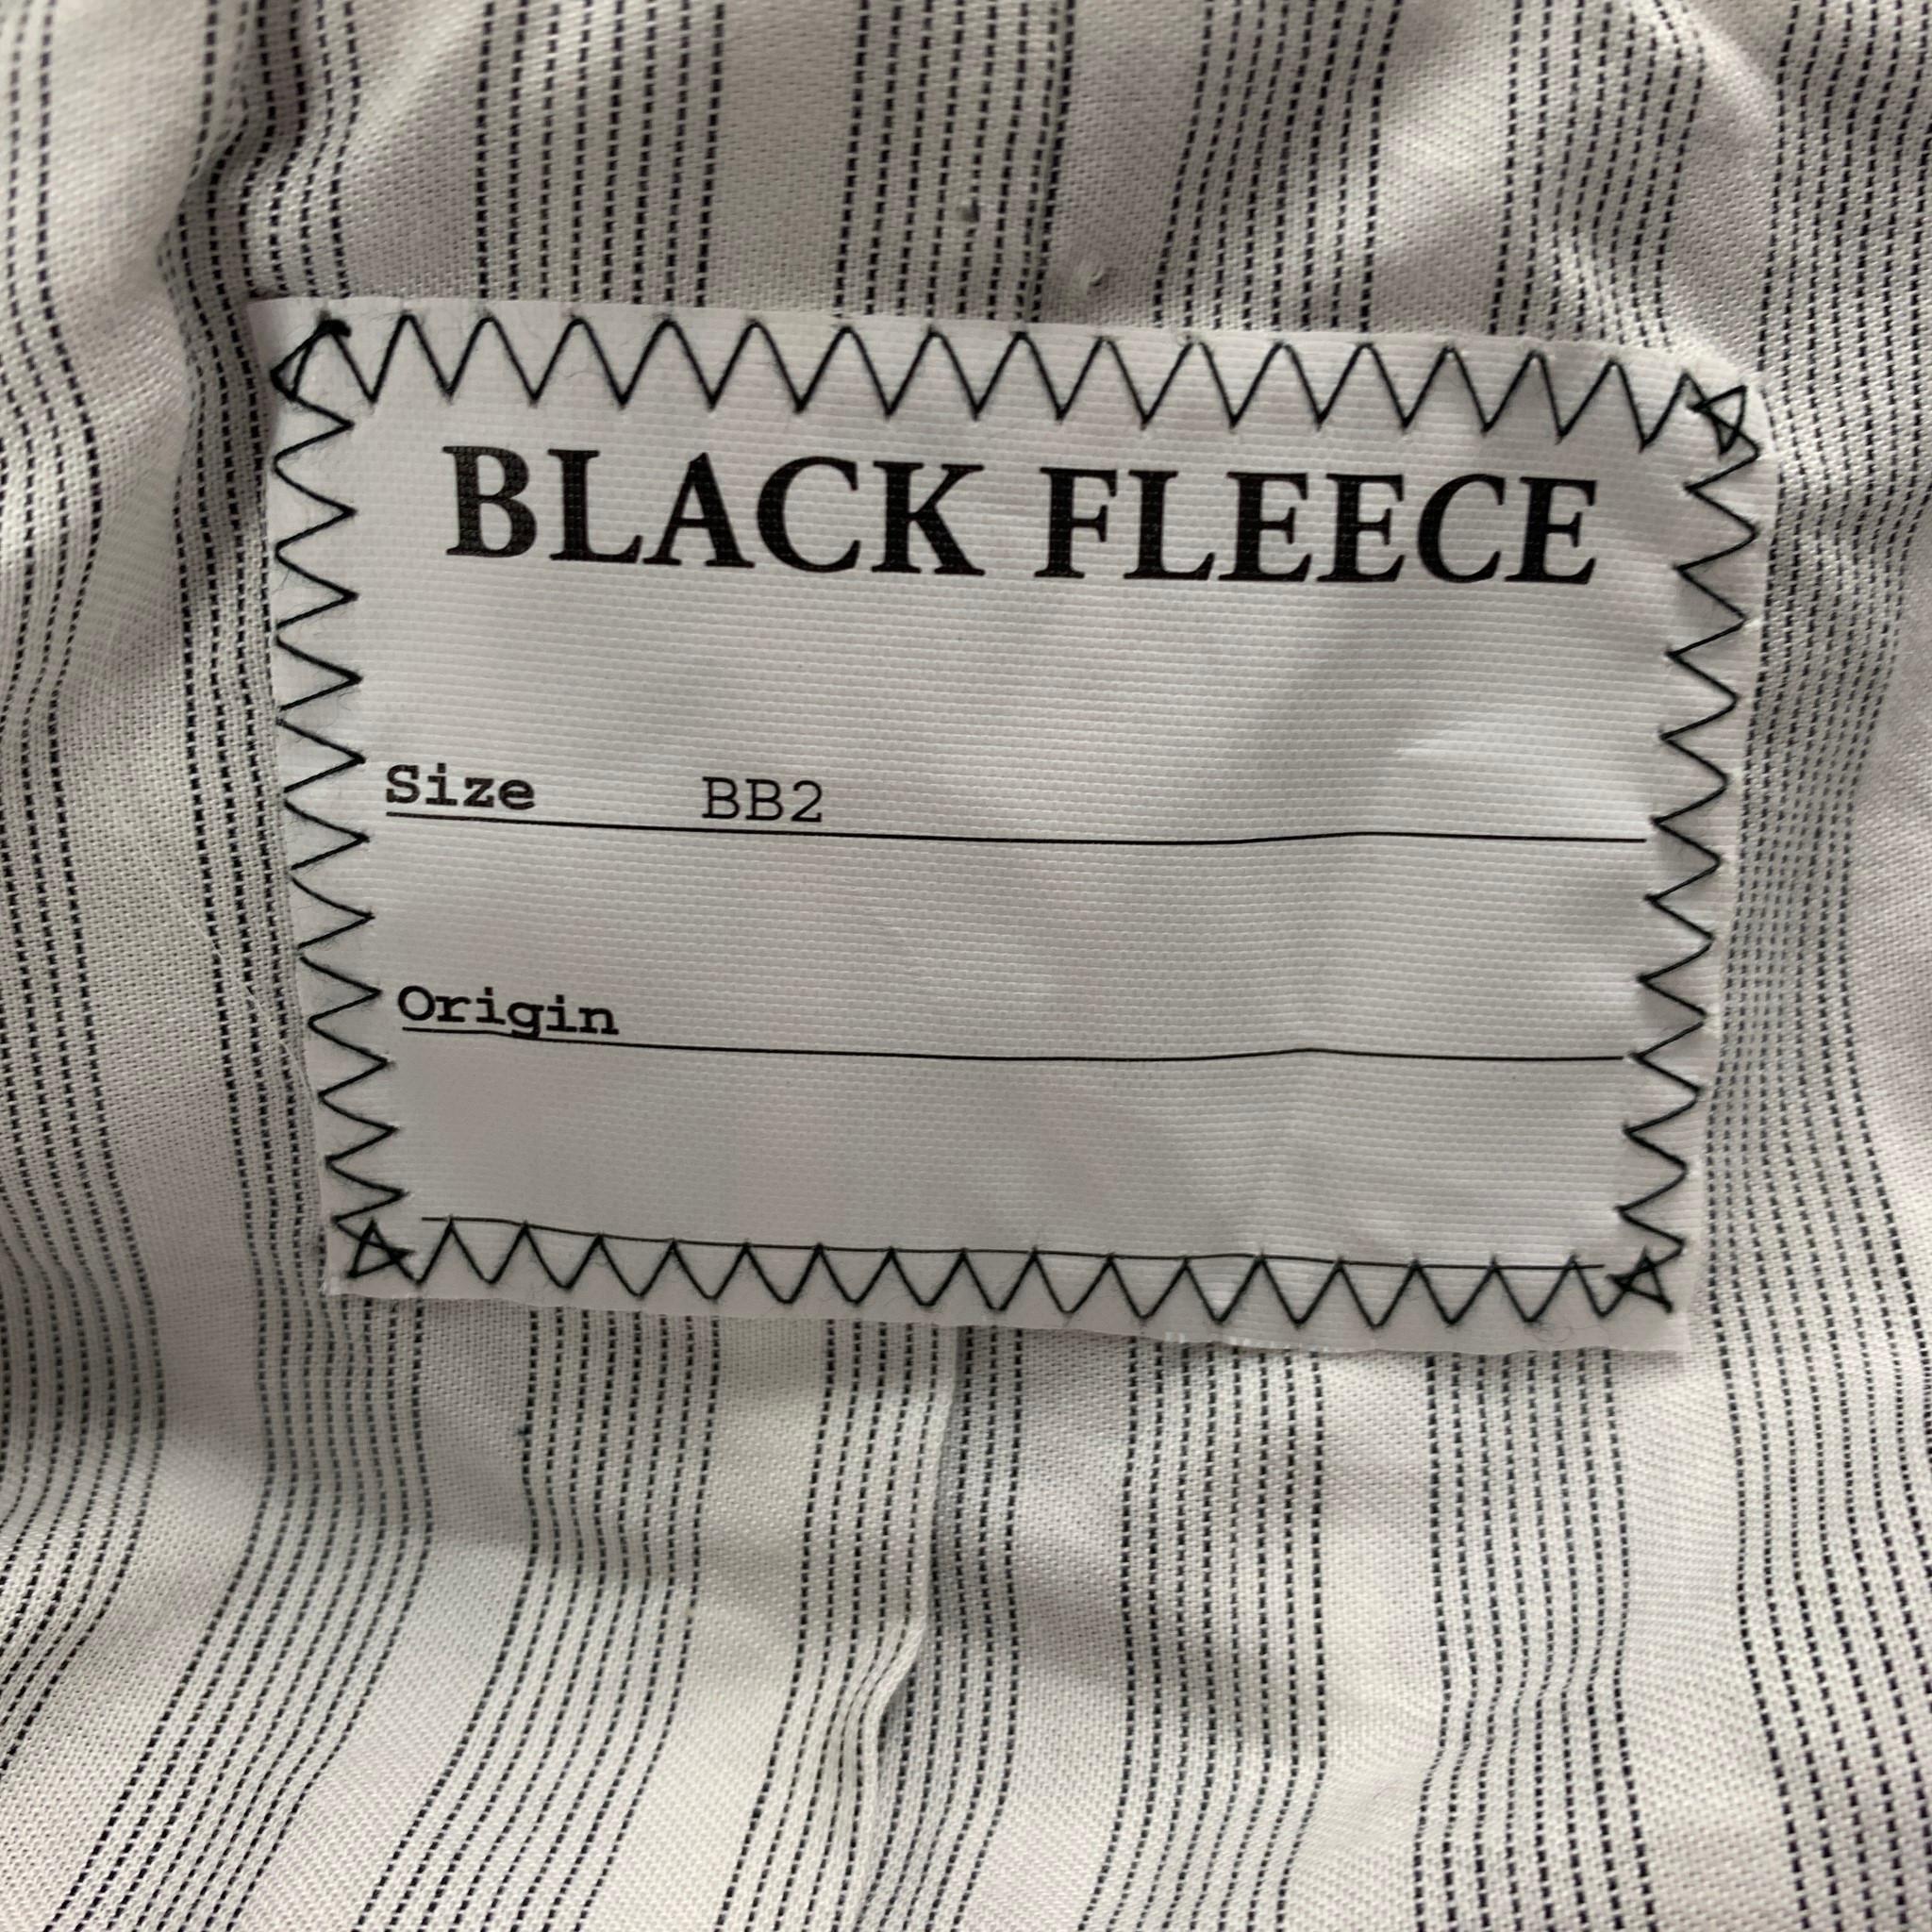 BLACK FLEECE Size M Gray Corduroy Cotton Jacket 4